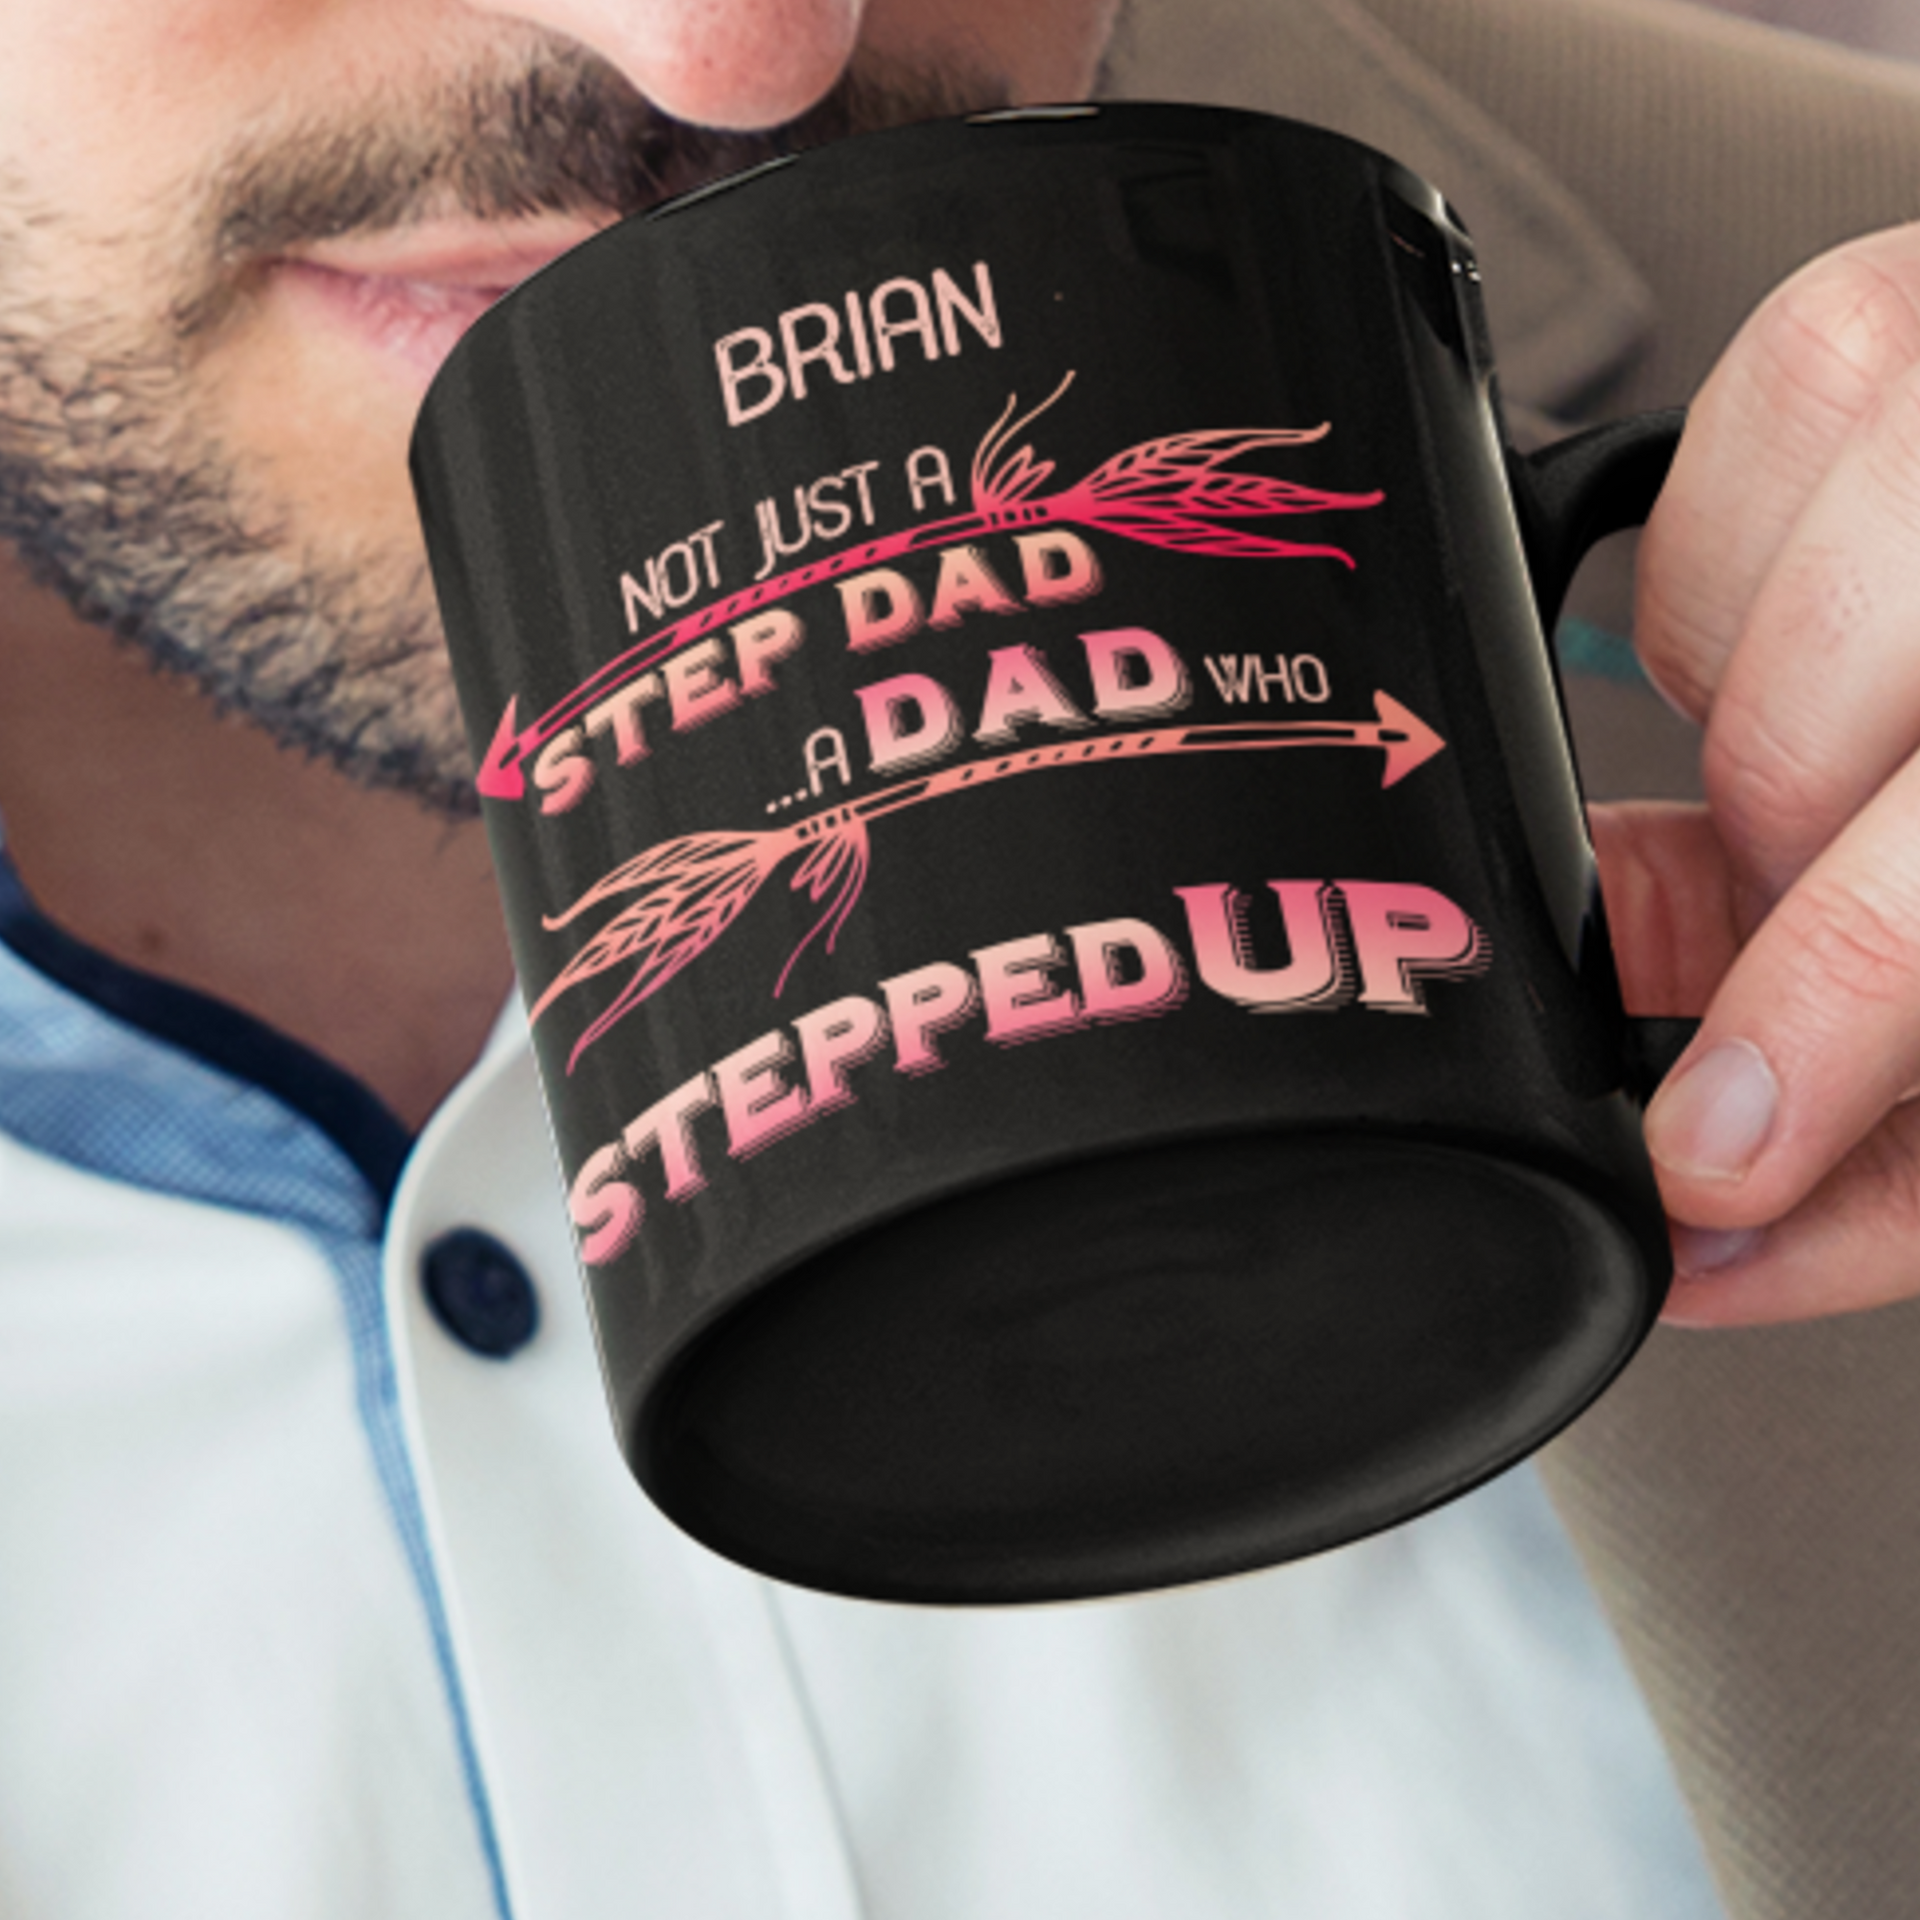 personalized step dad bonus dad black mug